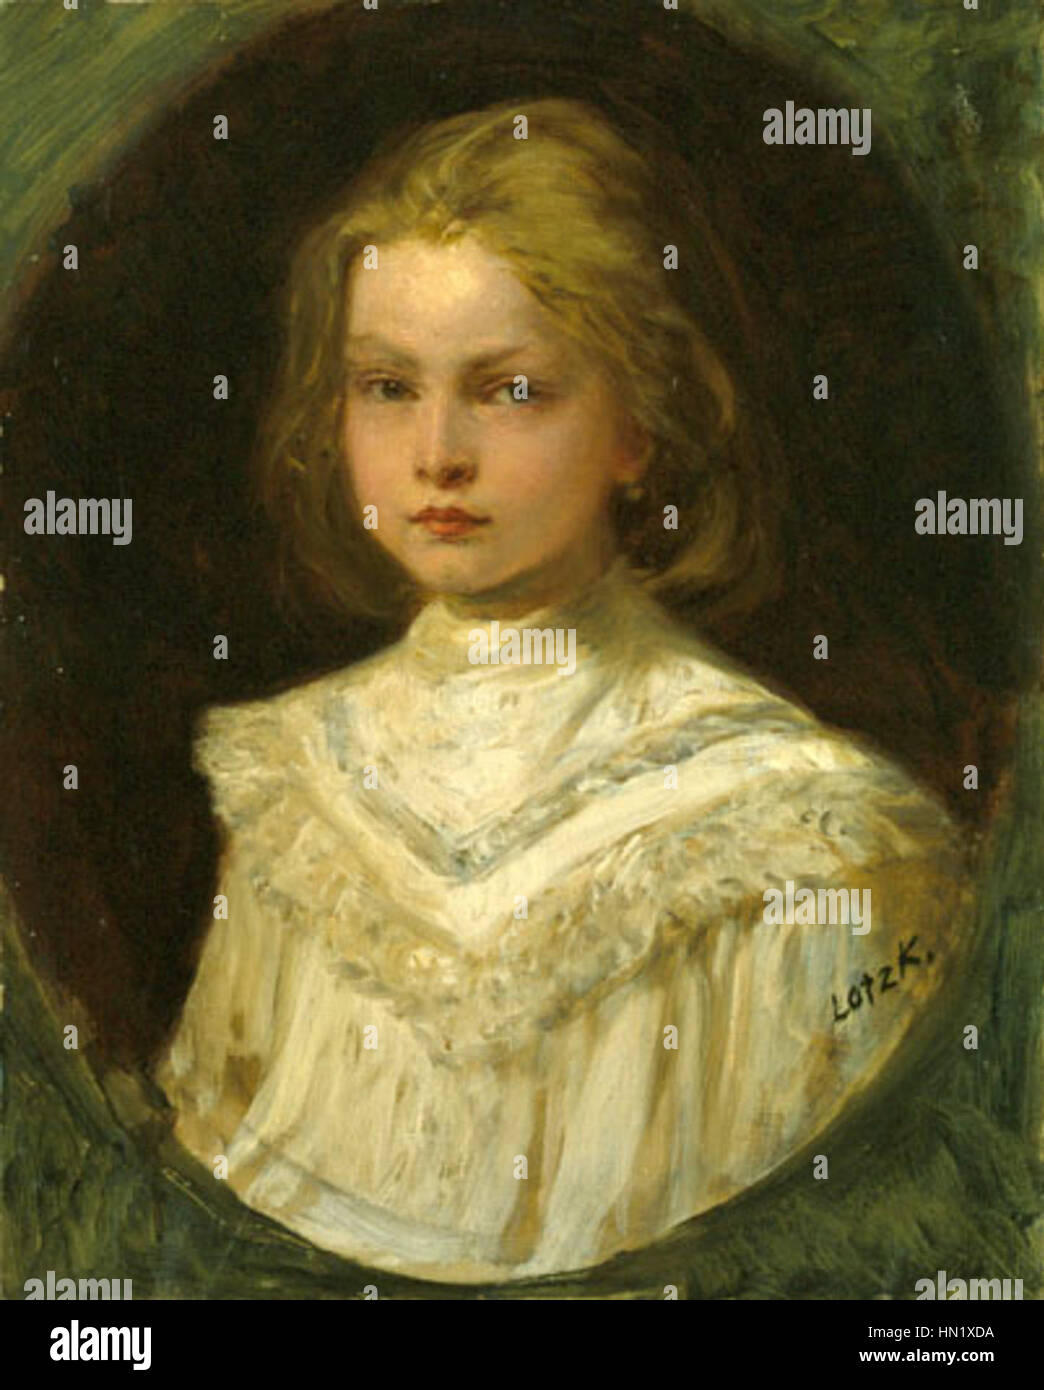 Lotz Little Girl 1880s Stock Photo - Alamy